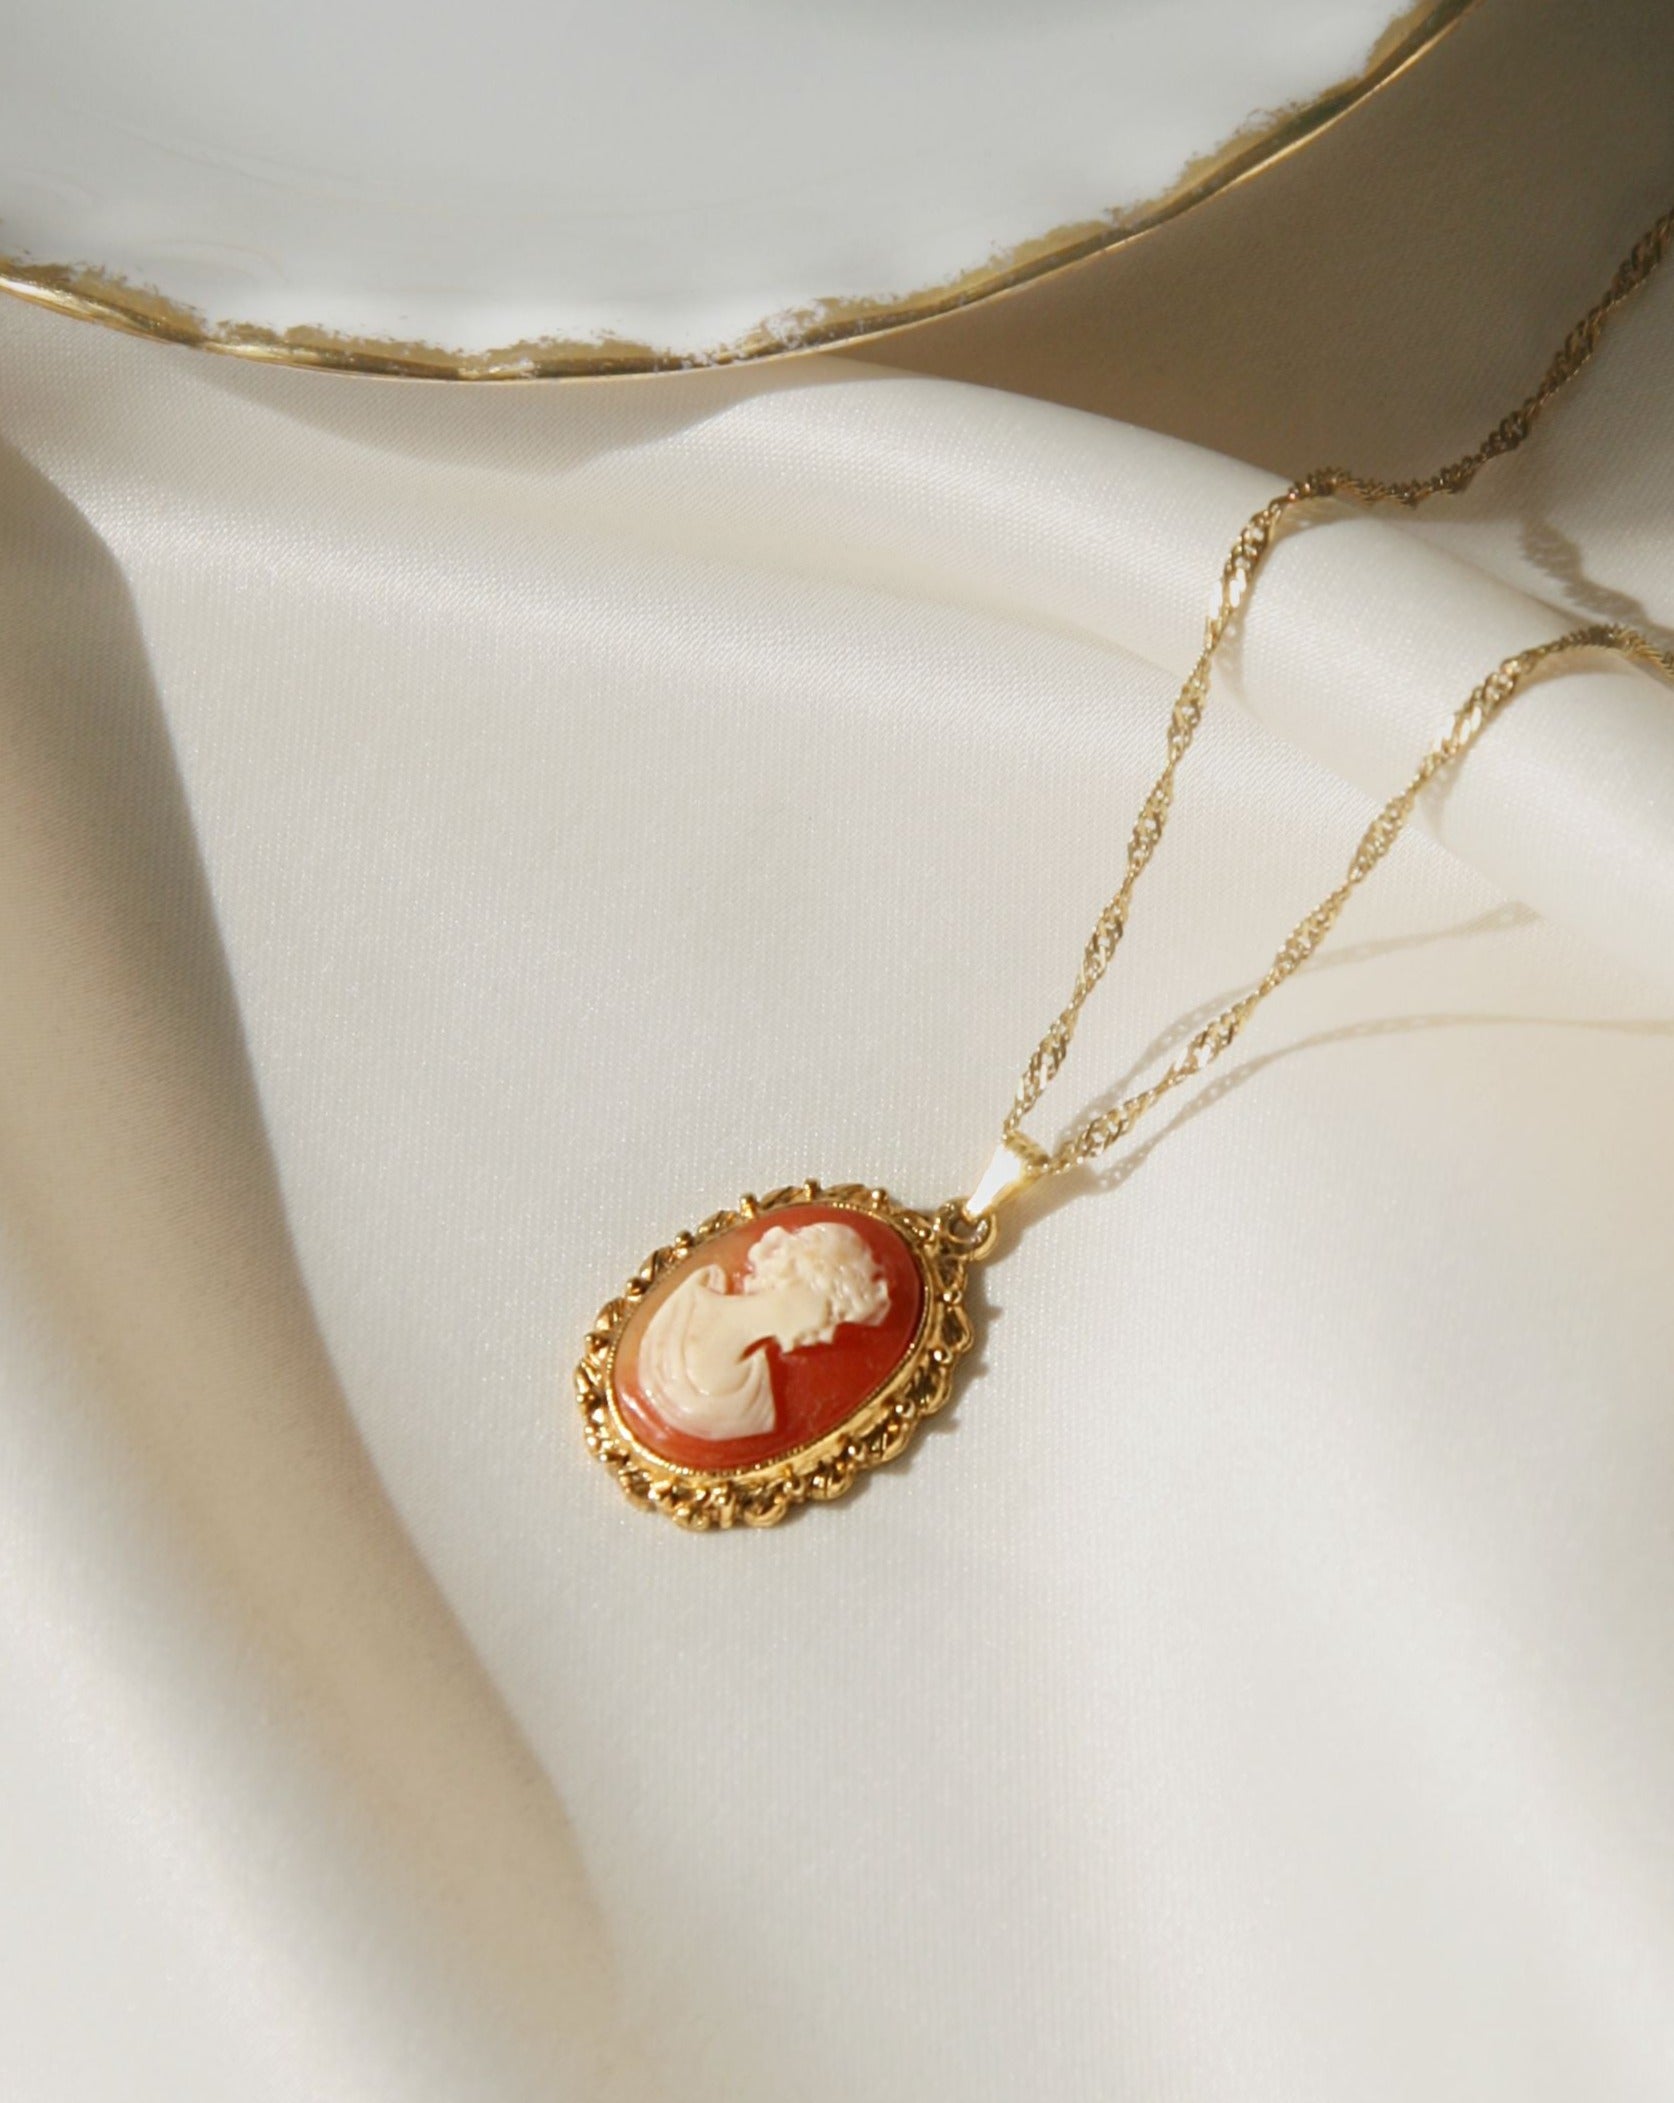 marianne dashwood jane austen inspired cameo necklace by bookish jewellery brand Avery Faye